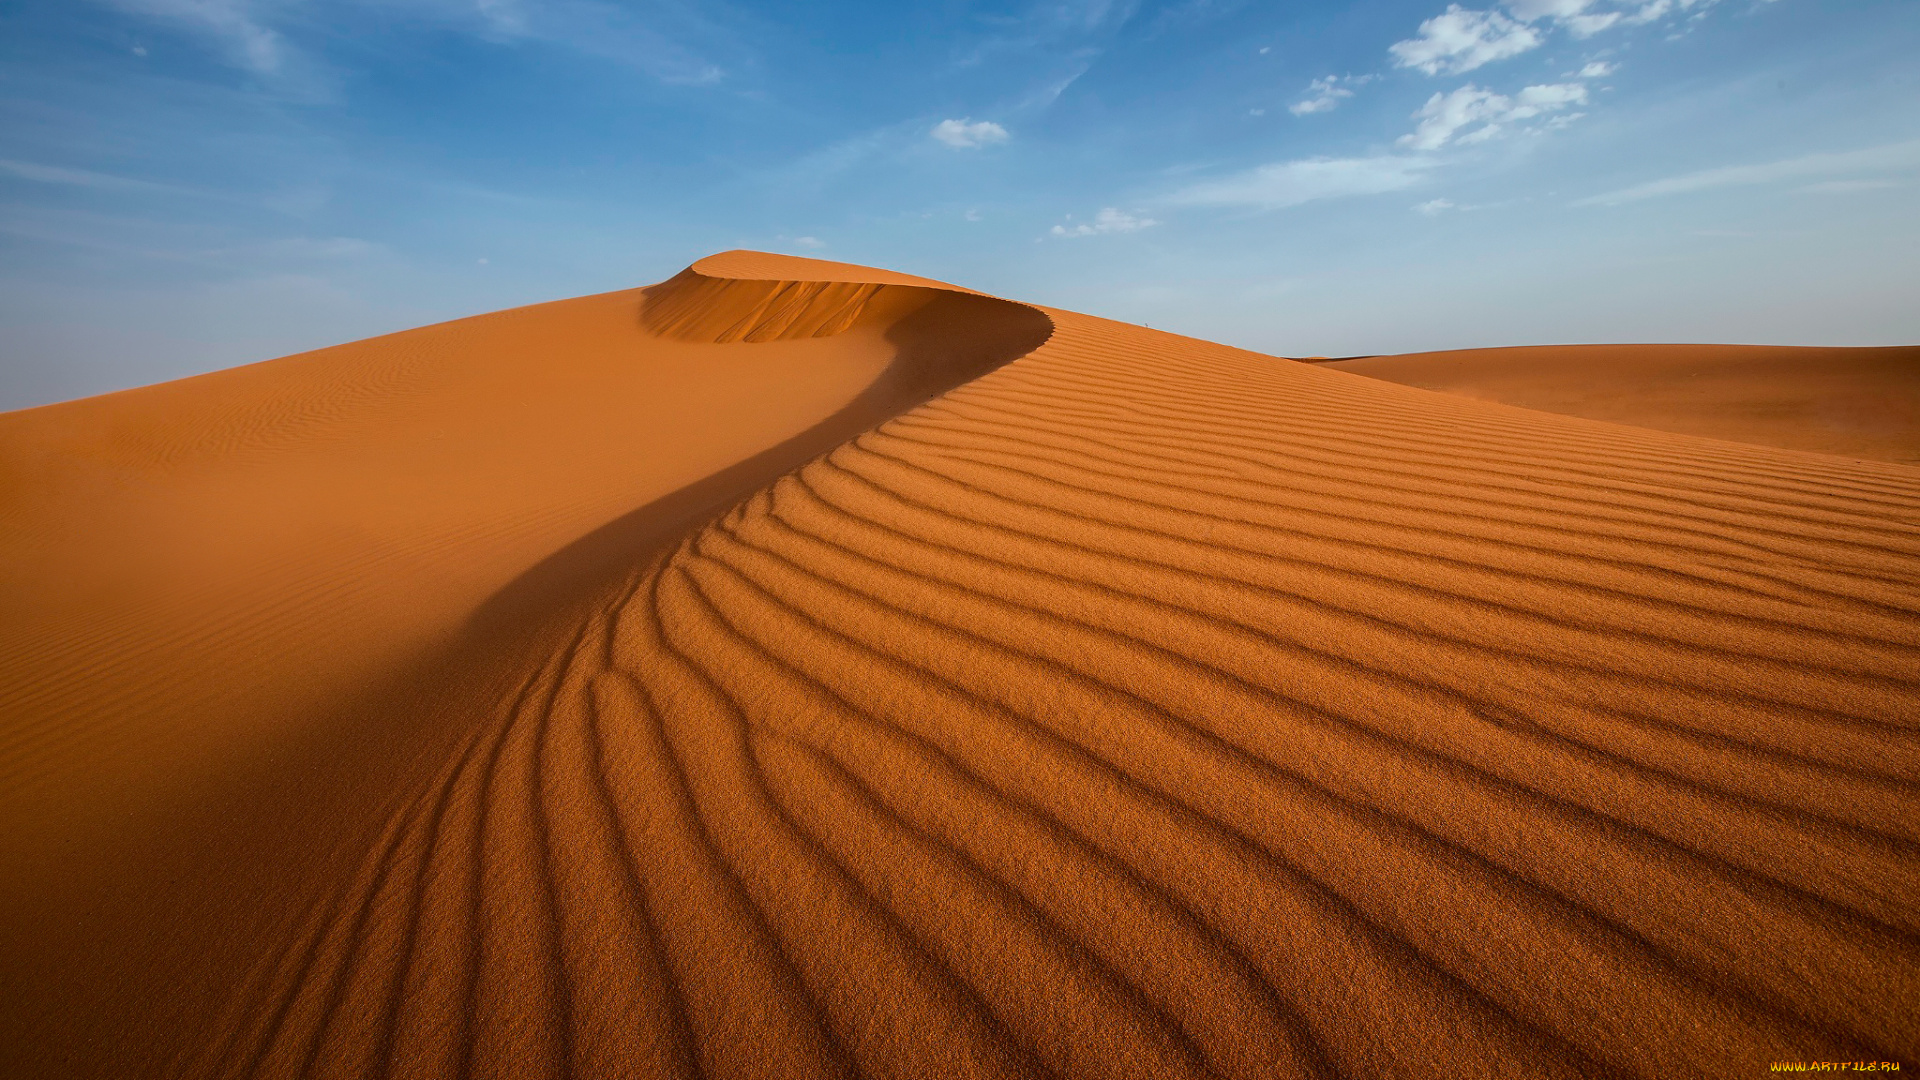 природа, пустыни, песок, облака, небо, дюны, барханы